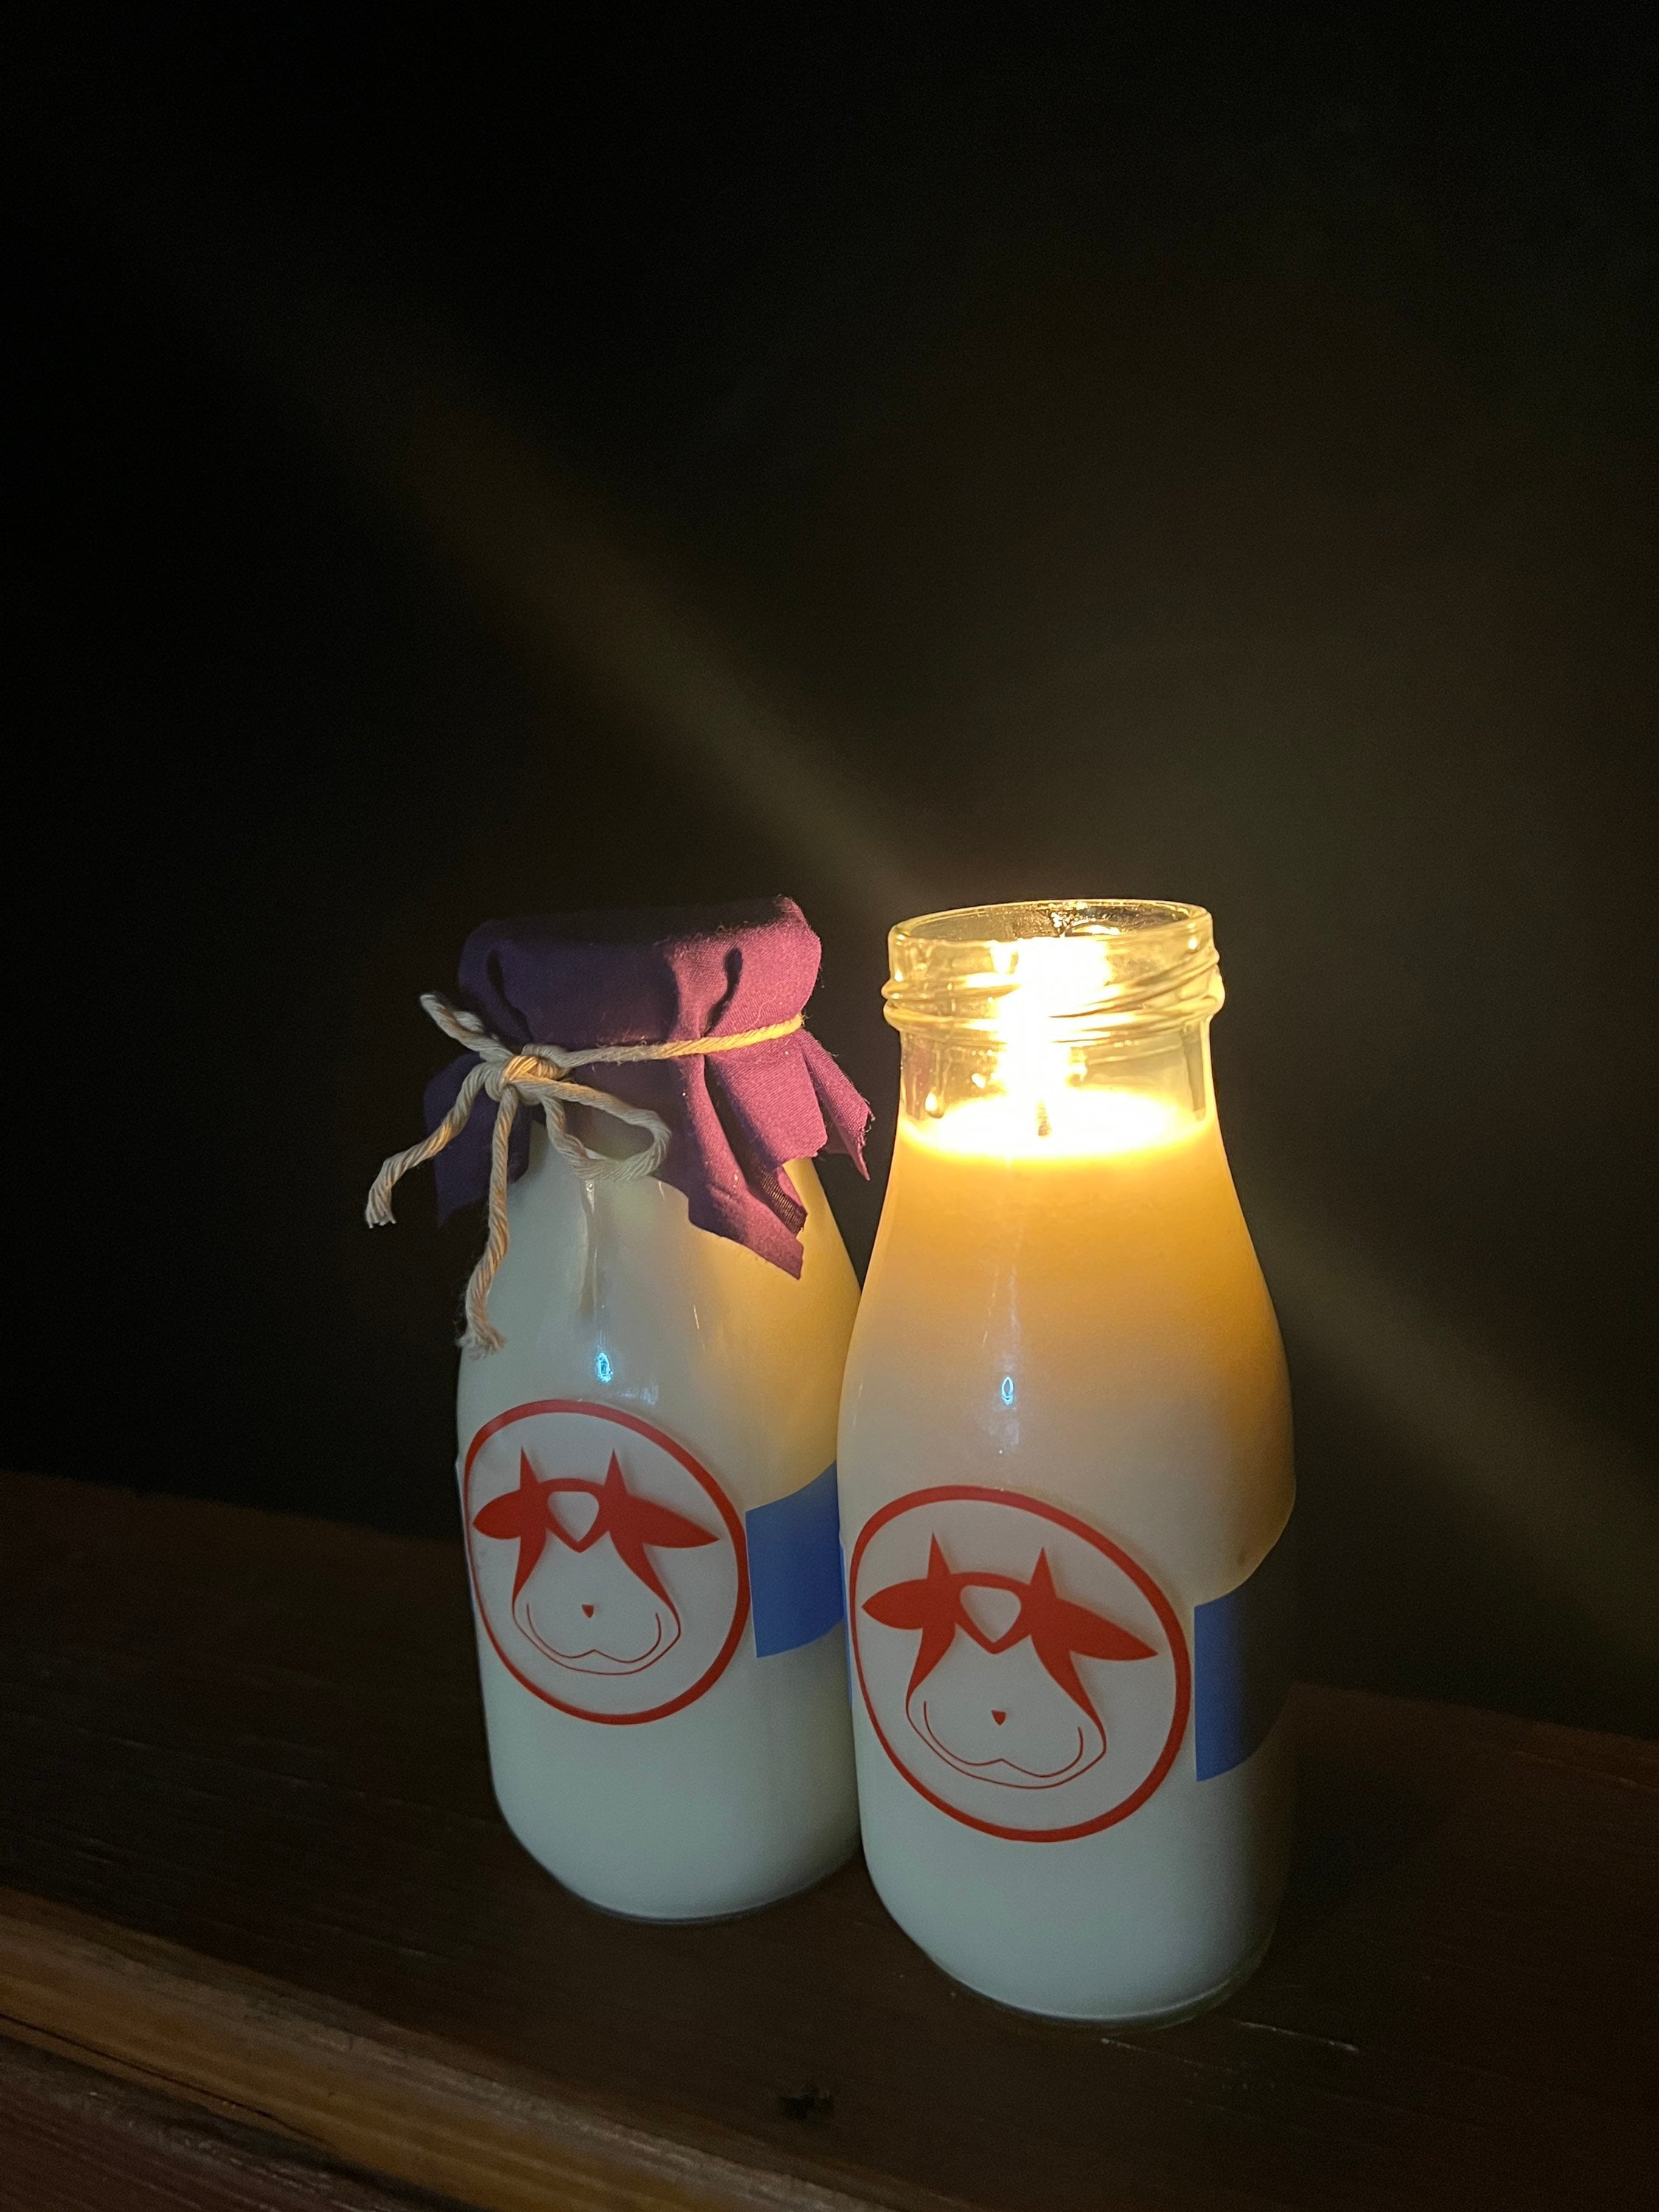 MooMoo Milk  Lunae Lumen Candles